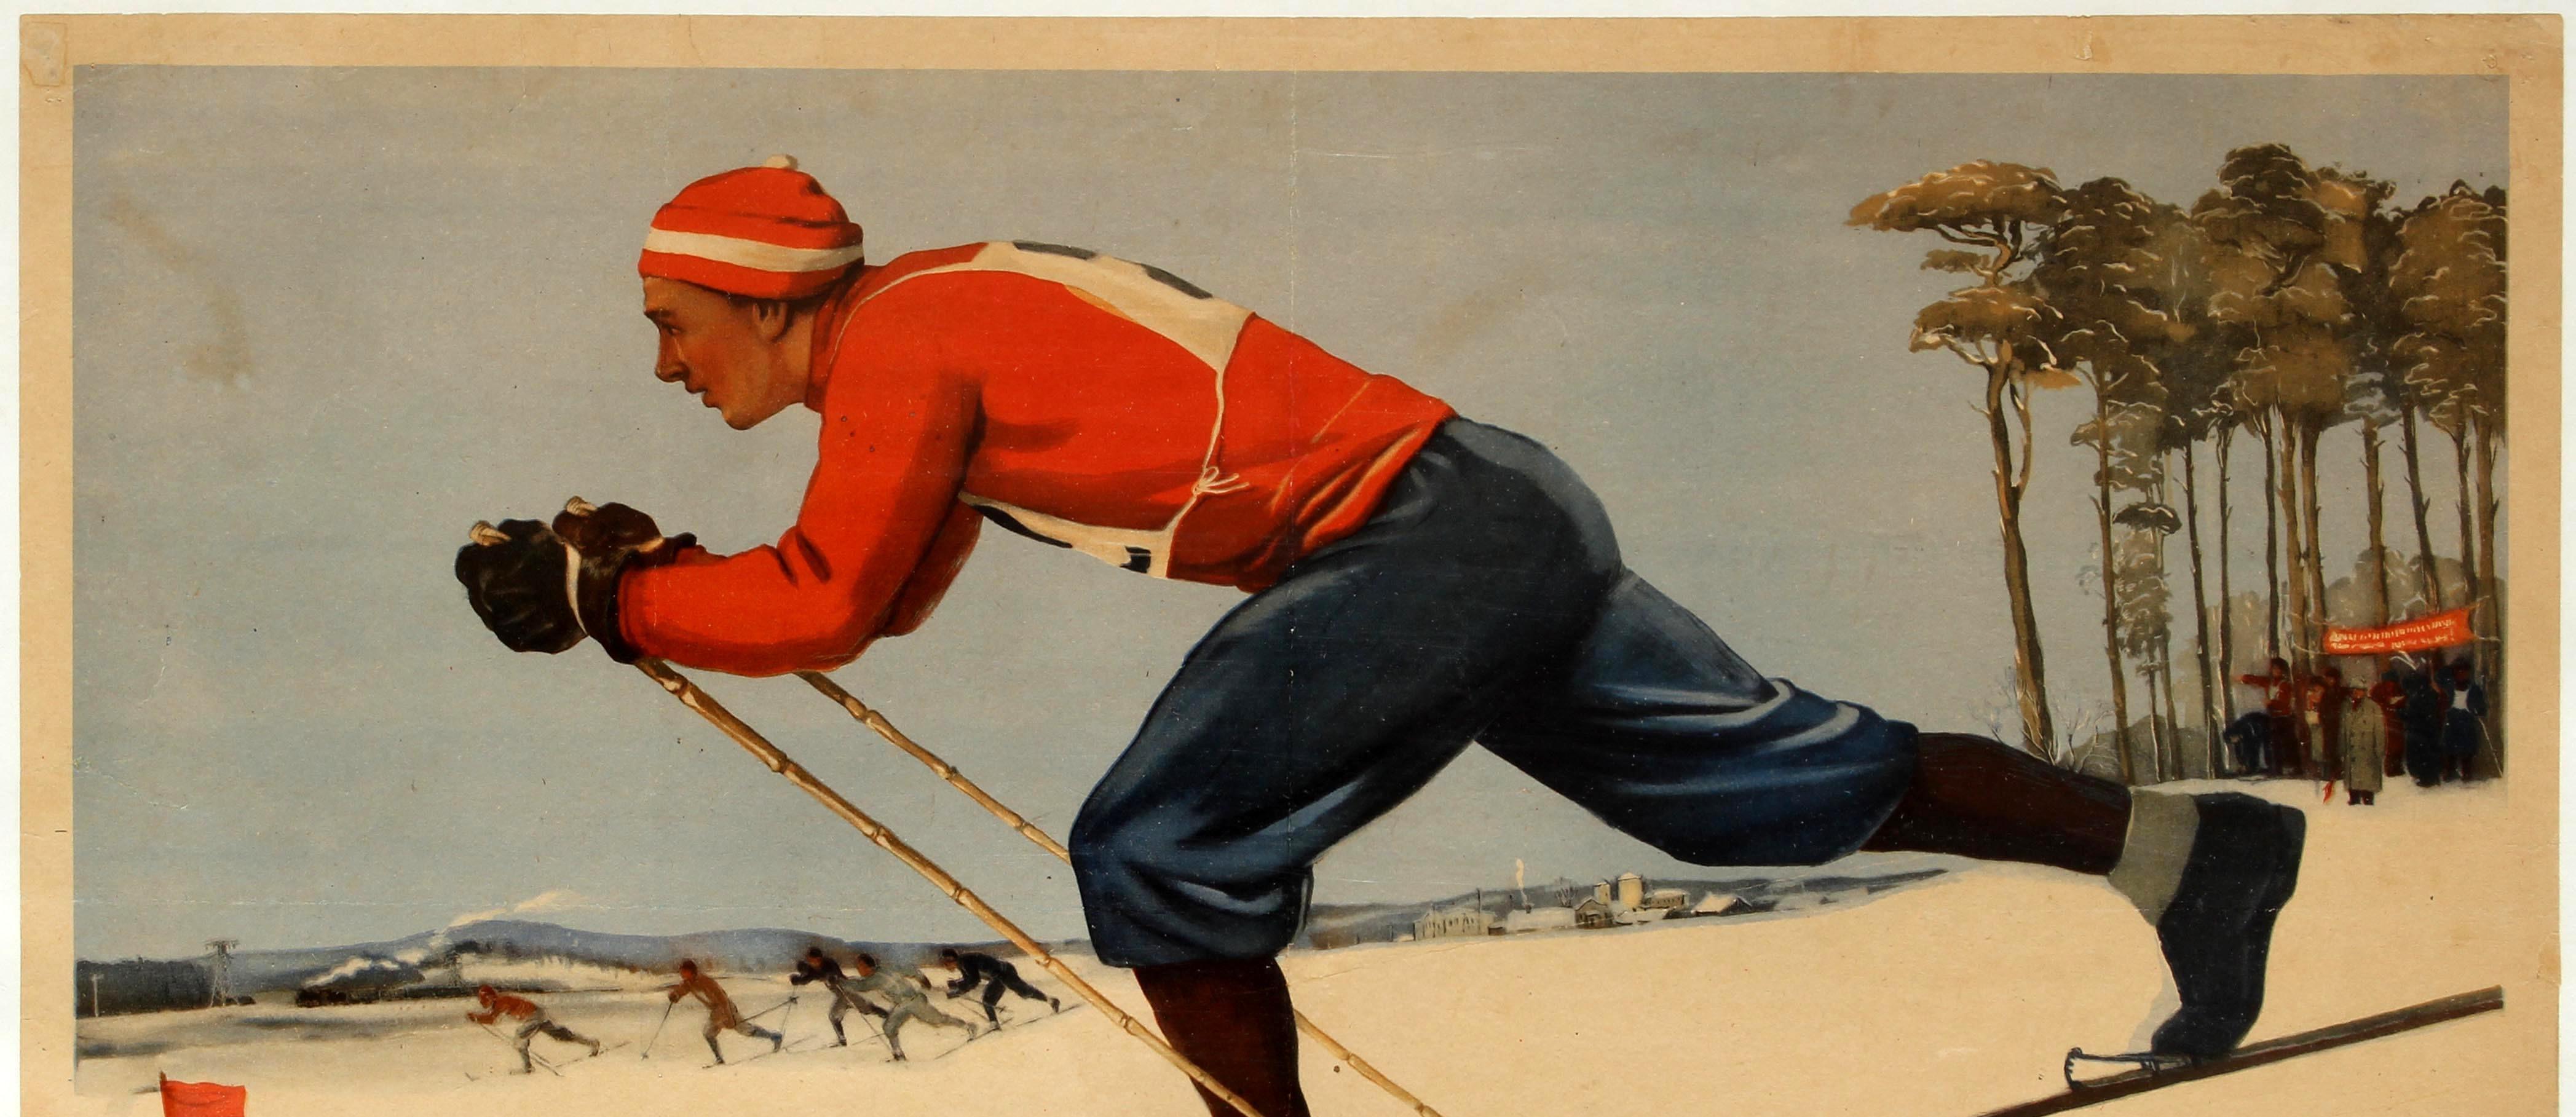 Original Vintage Soviet Sport Propaganda Poster - Youth Go Cross Country Skiing - Print by N. Tereshchenko